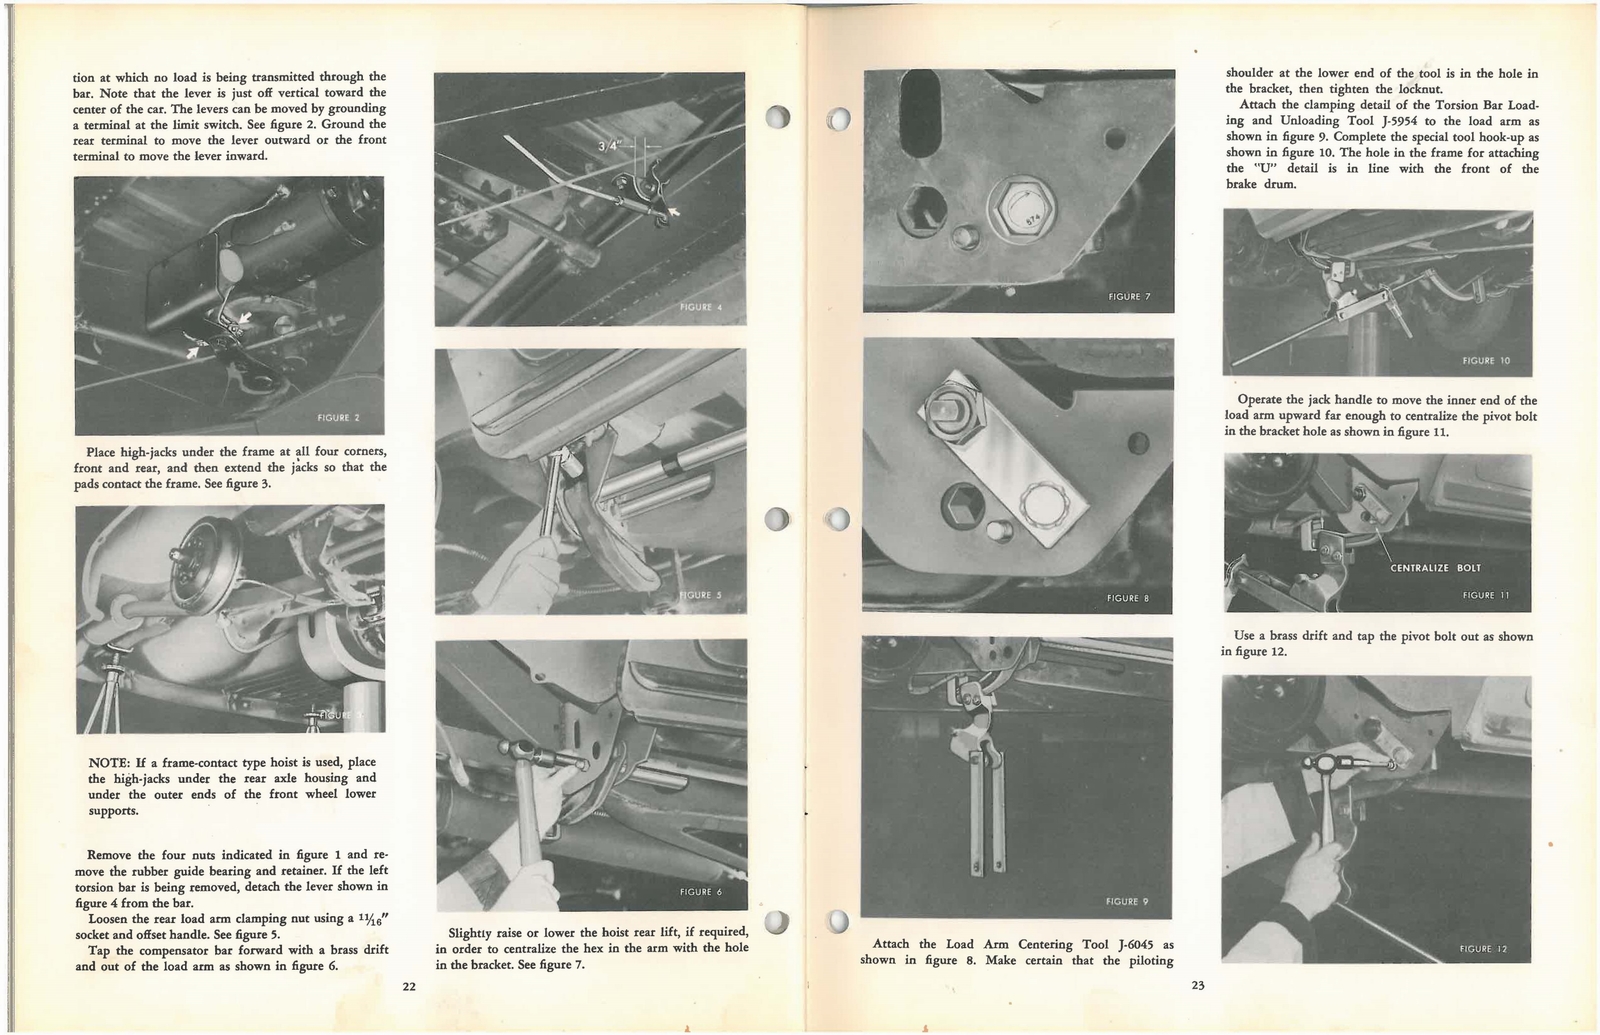 n_1955 Packard Sevicemens Training Book-22-23.jpg